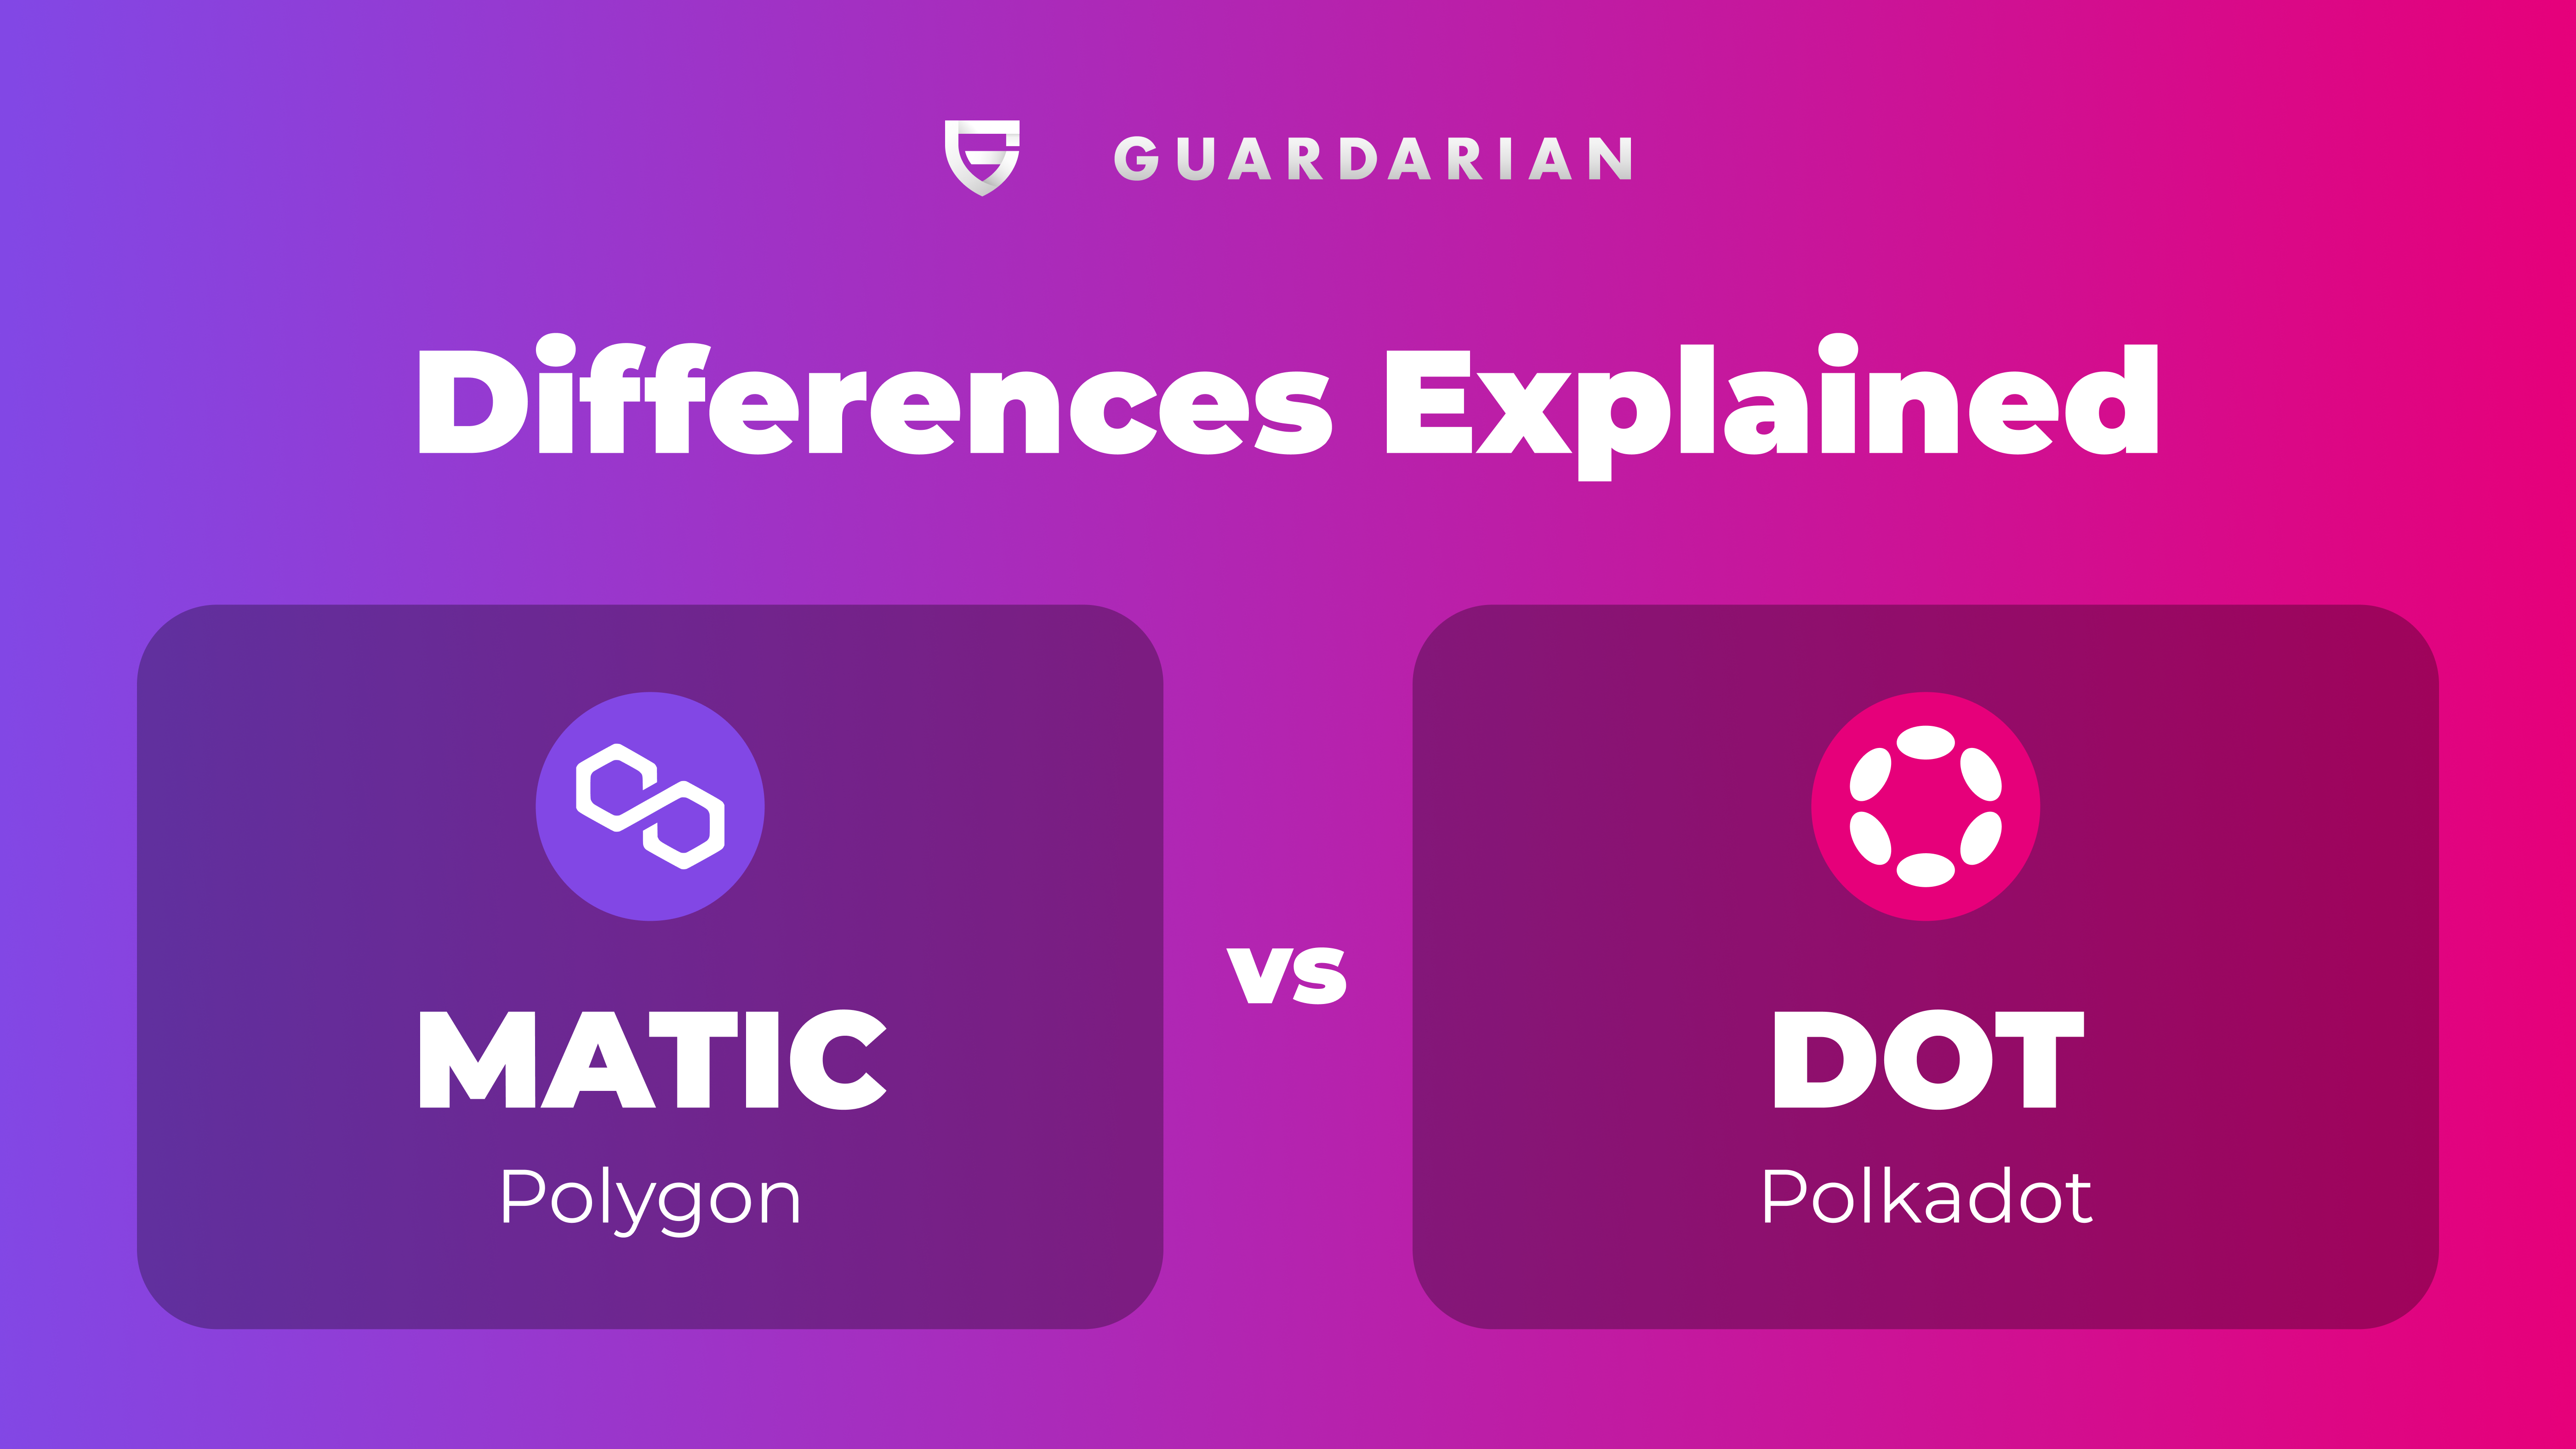 Polygon vs Polkadot - Differences explained